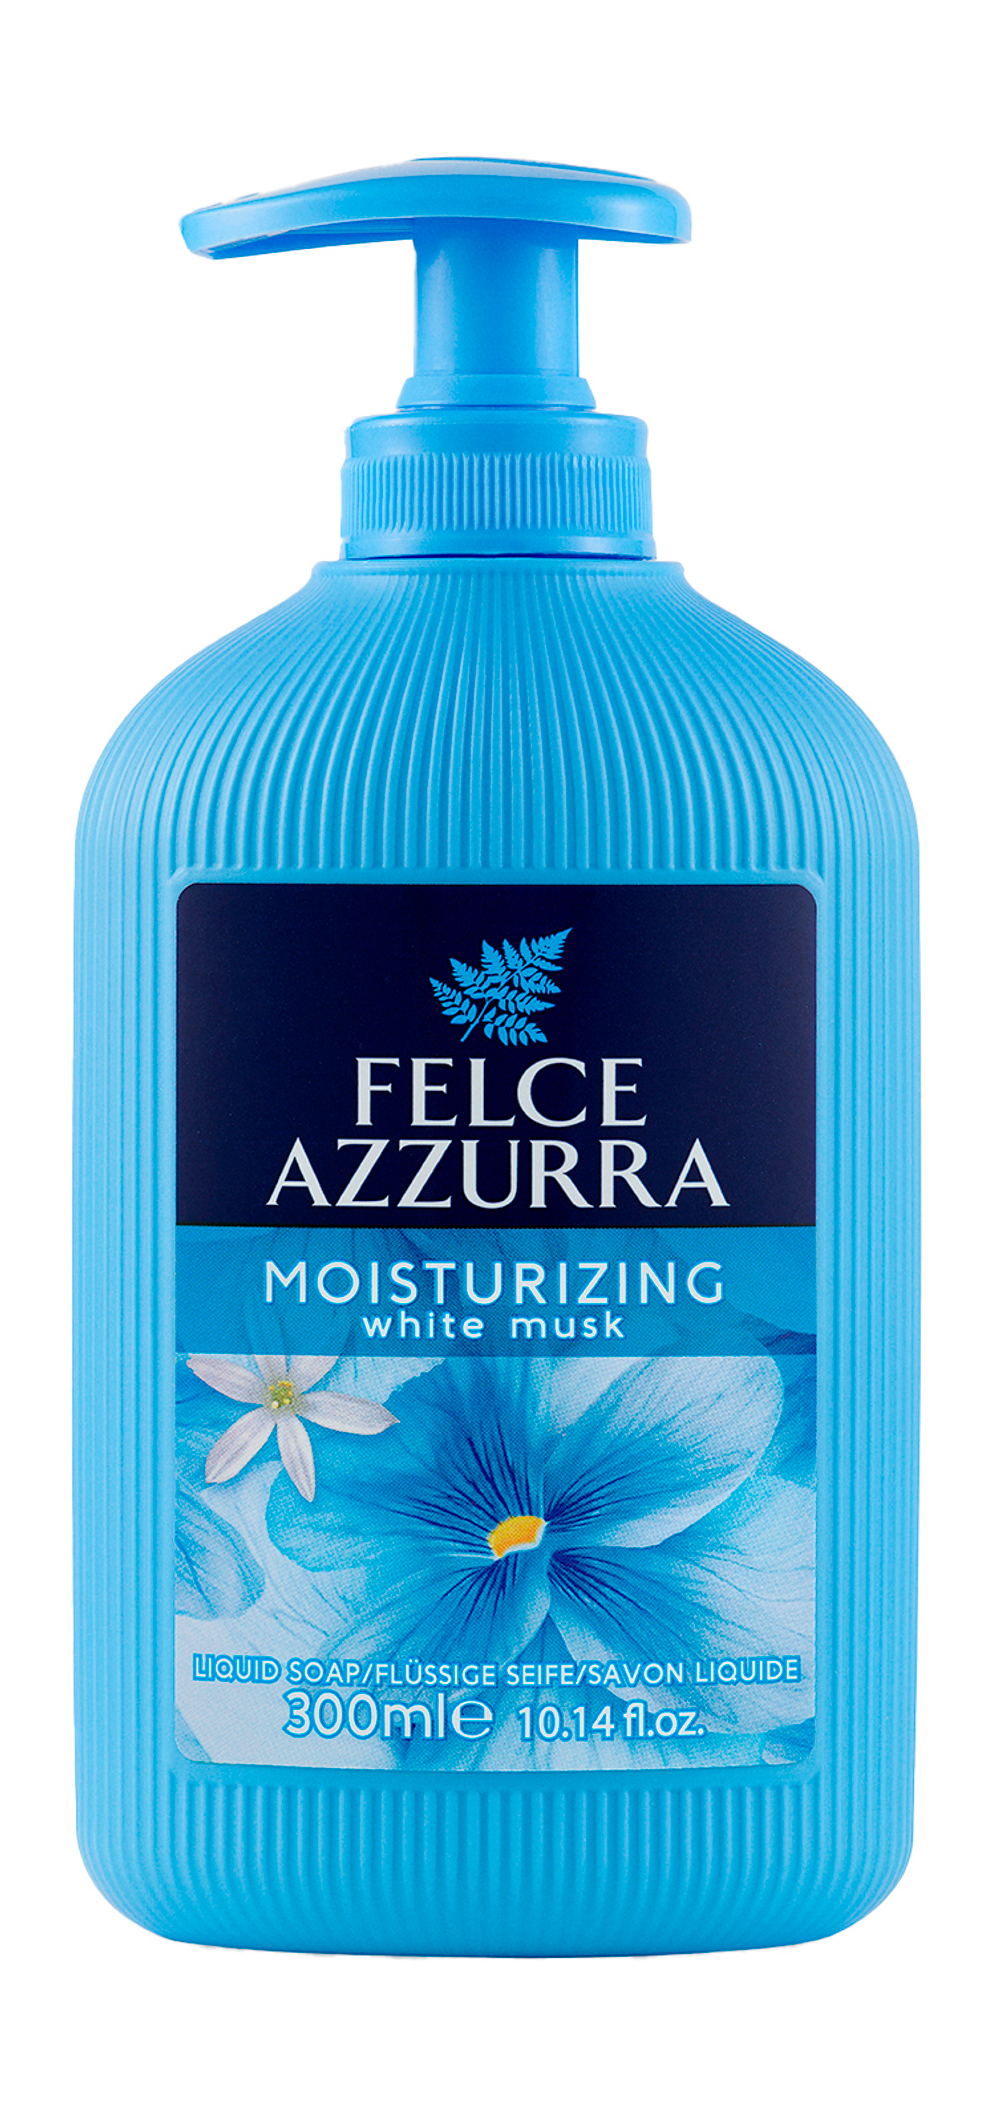 FELCE AZZURRA Увлажняющее жидкое мыло для рук c ароматом белого мускуса MOISTURIZING WHITE MUSK LIQUID SOAP 300 мл